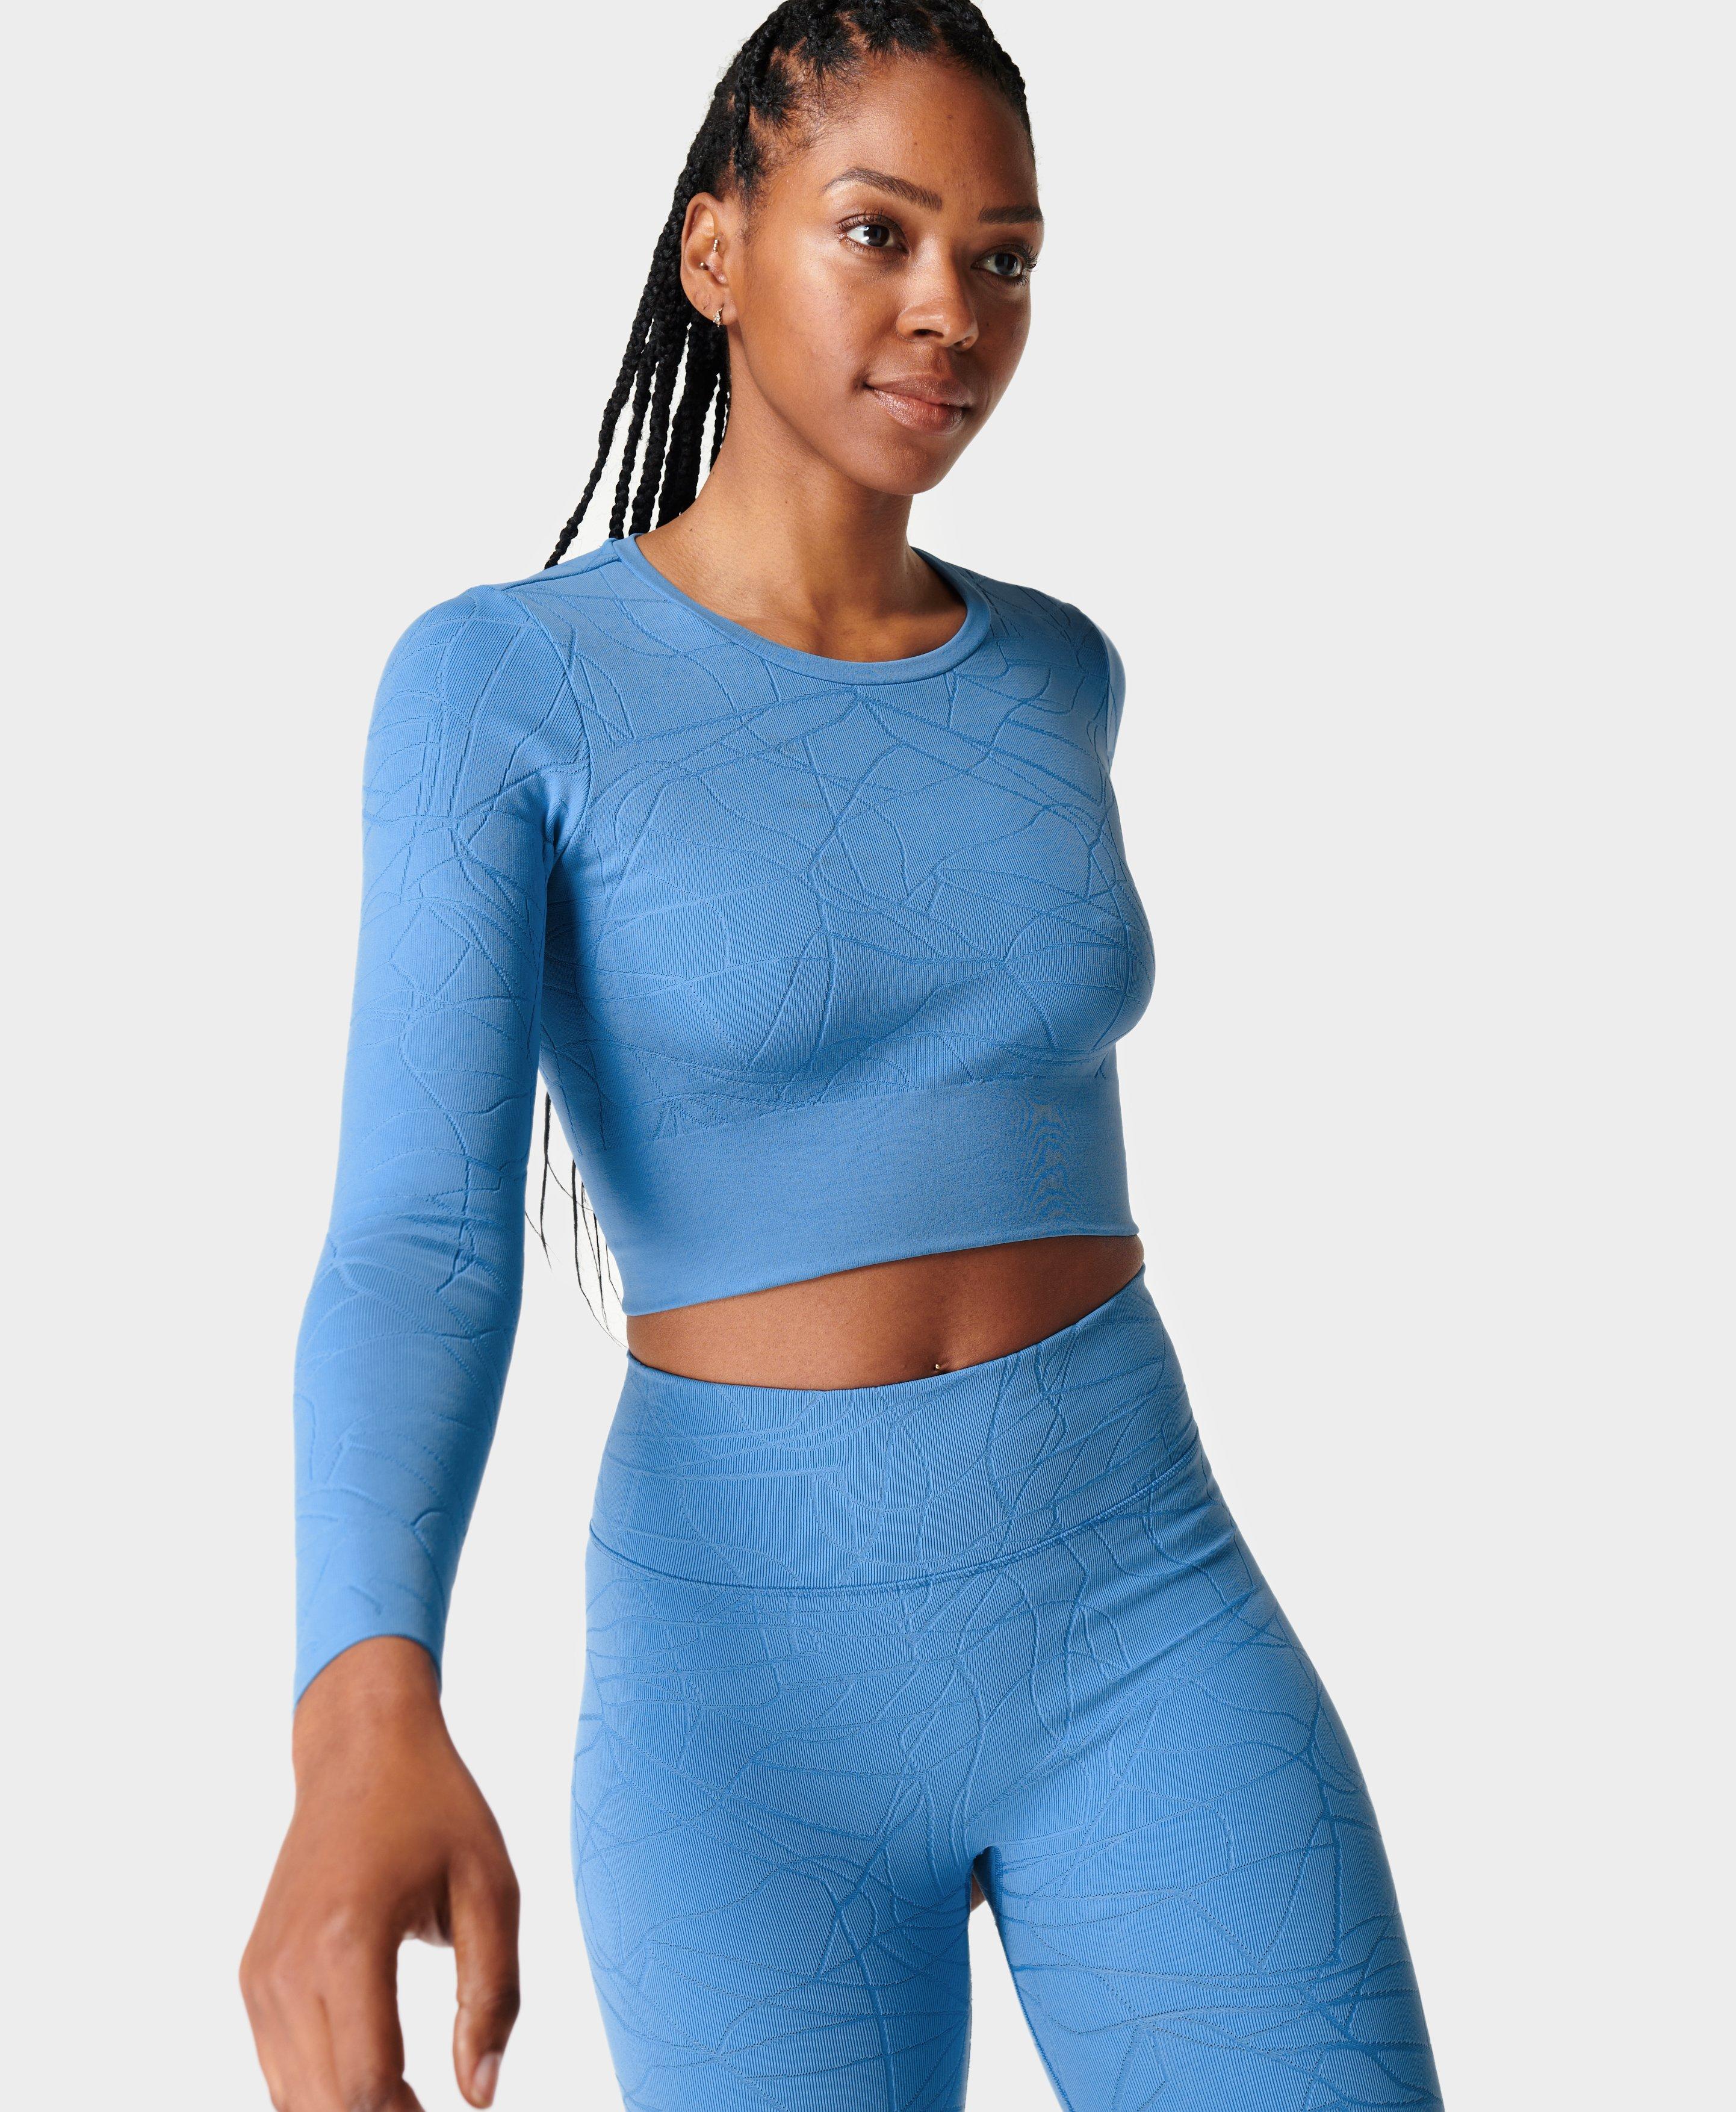 Womens Plus Size Blue Long Sleeve Mesh Yoga Crop Top Set 2XL